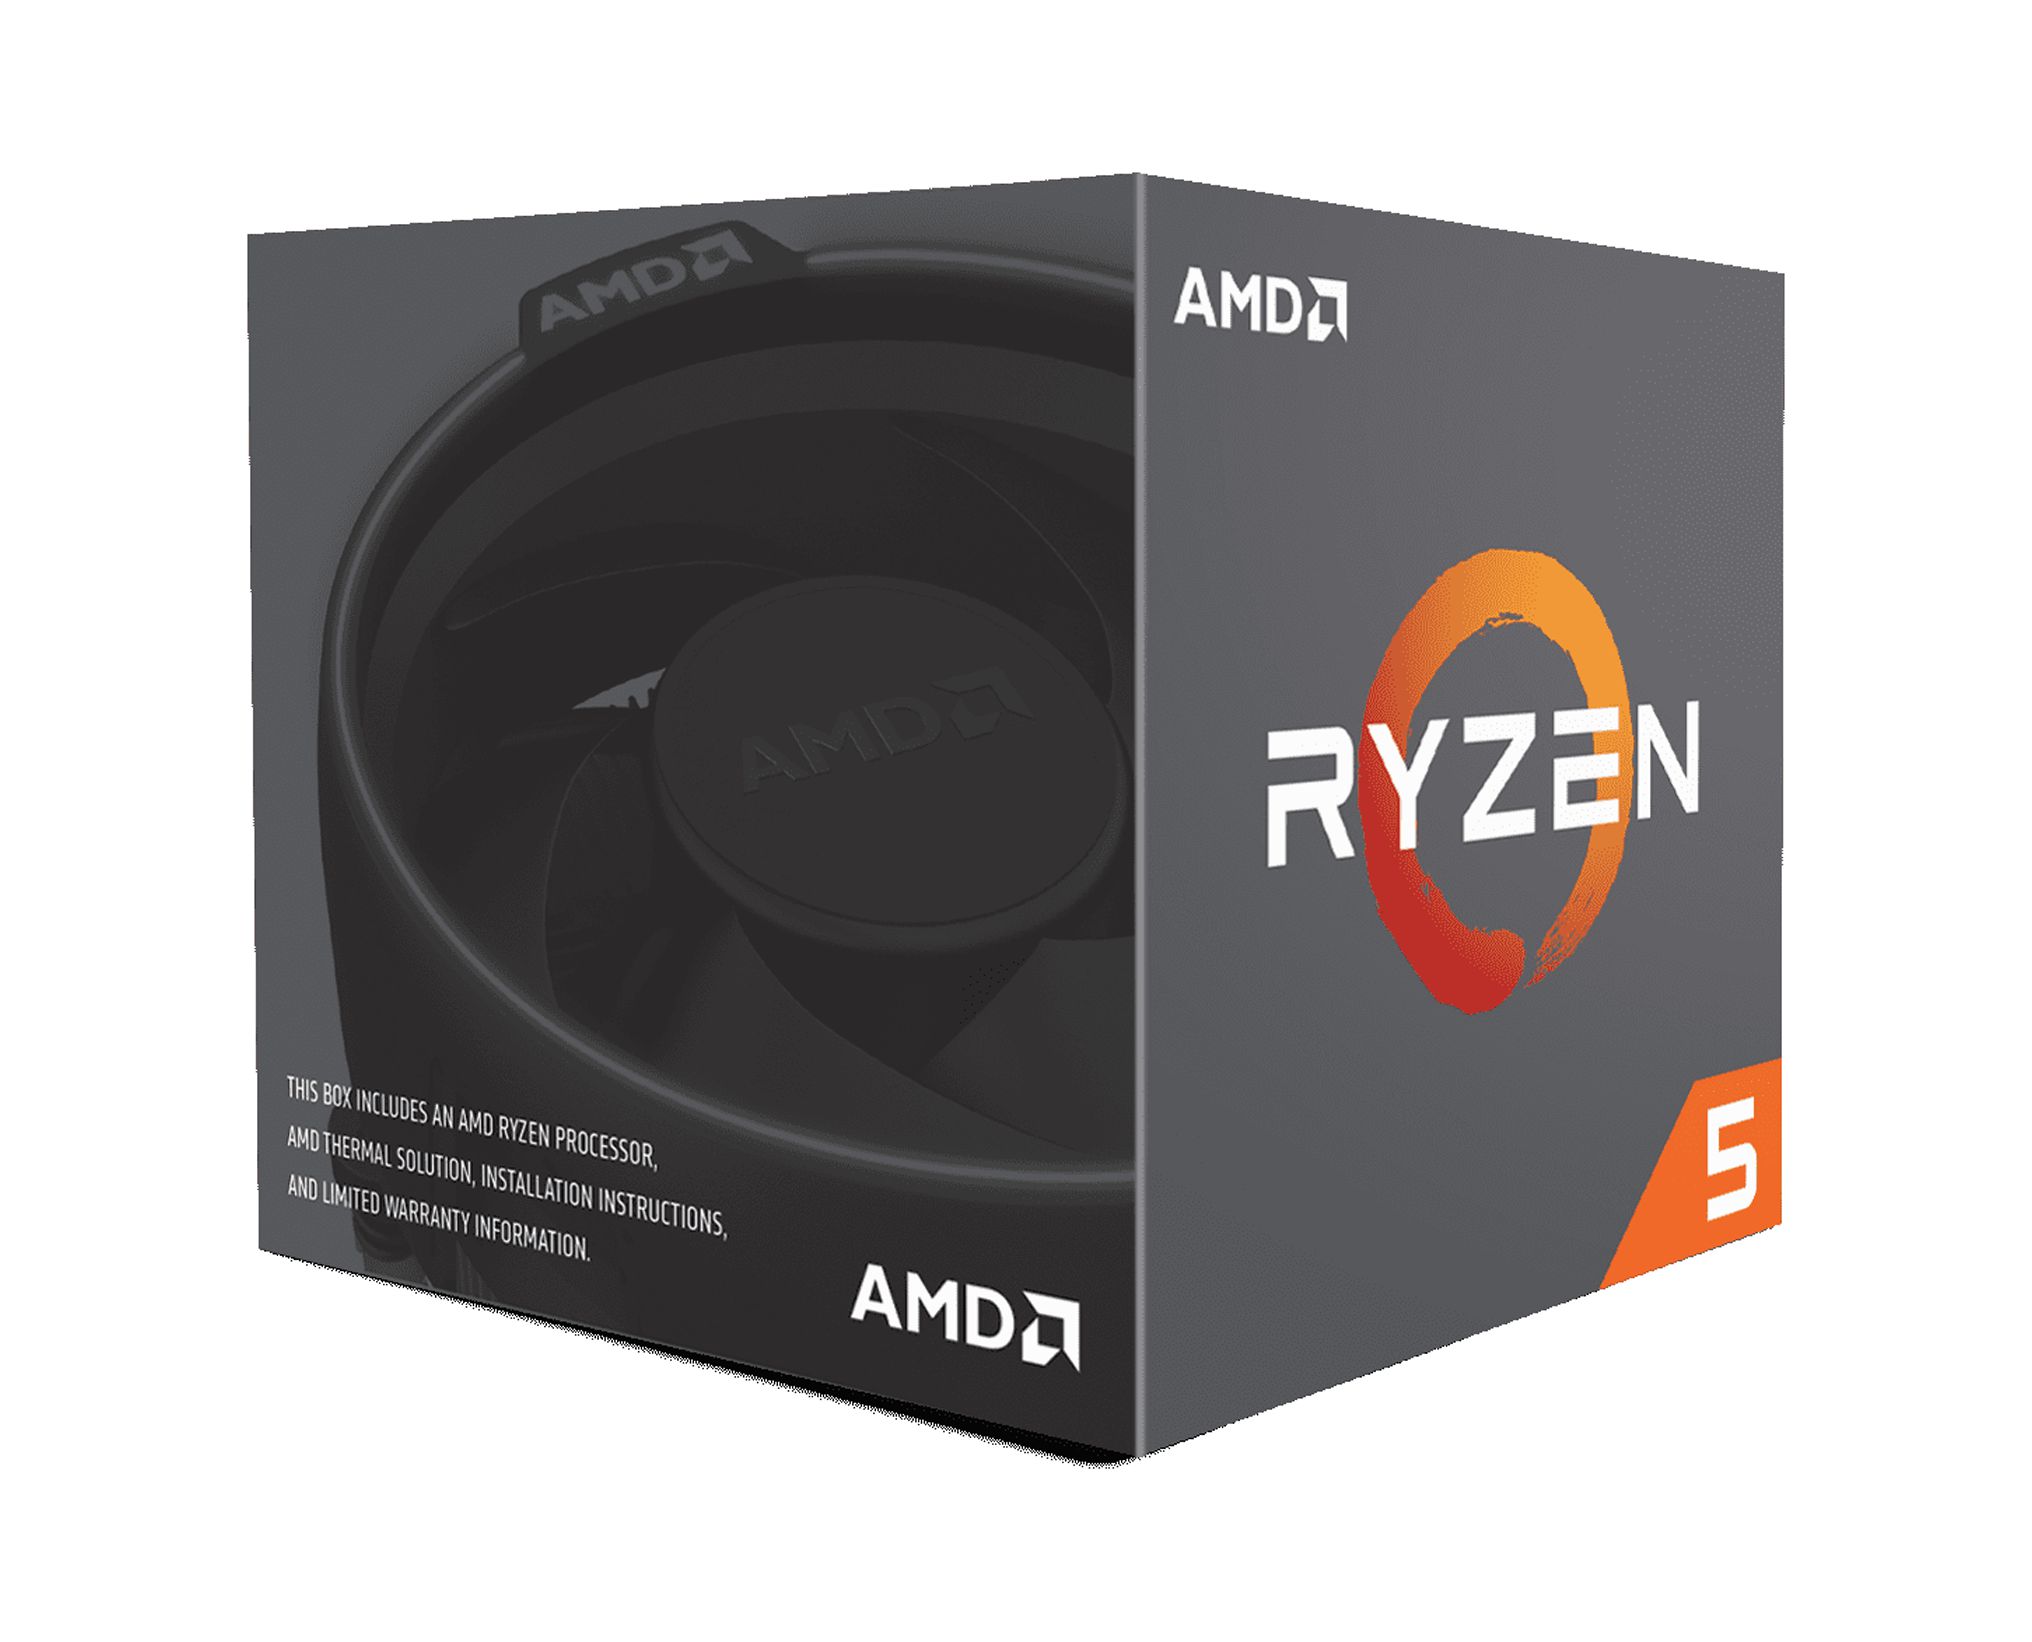 AMD RYZEN 5 1500X 3.5 GHz (3.7 GHz Turbo) 4-Core Socket AM4 16MB Cache Desktop Processor - YD150XBBAEBOX - image 2 of 2